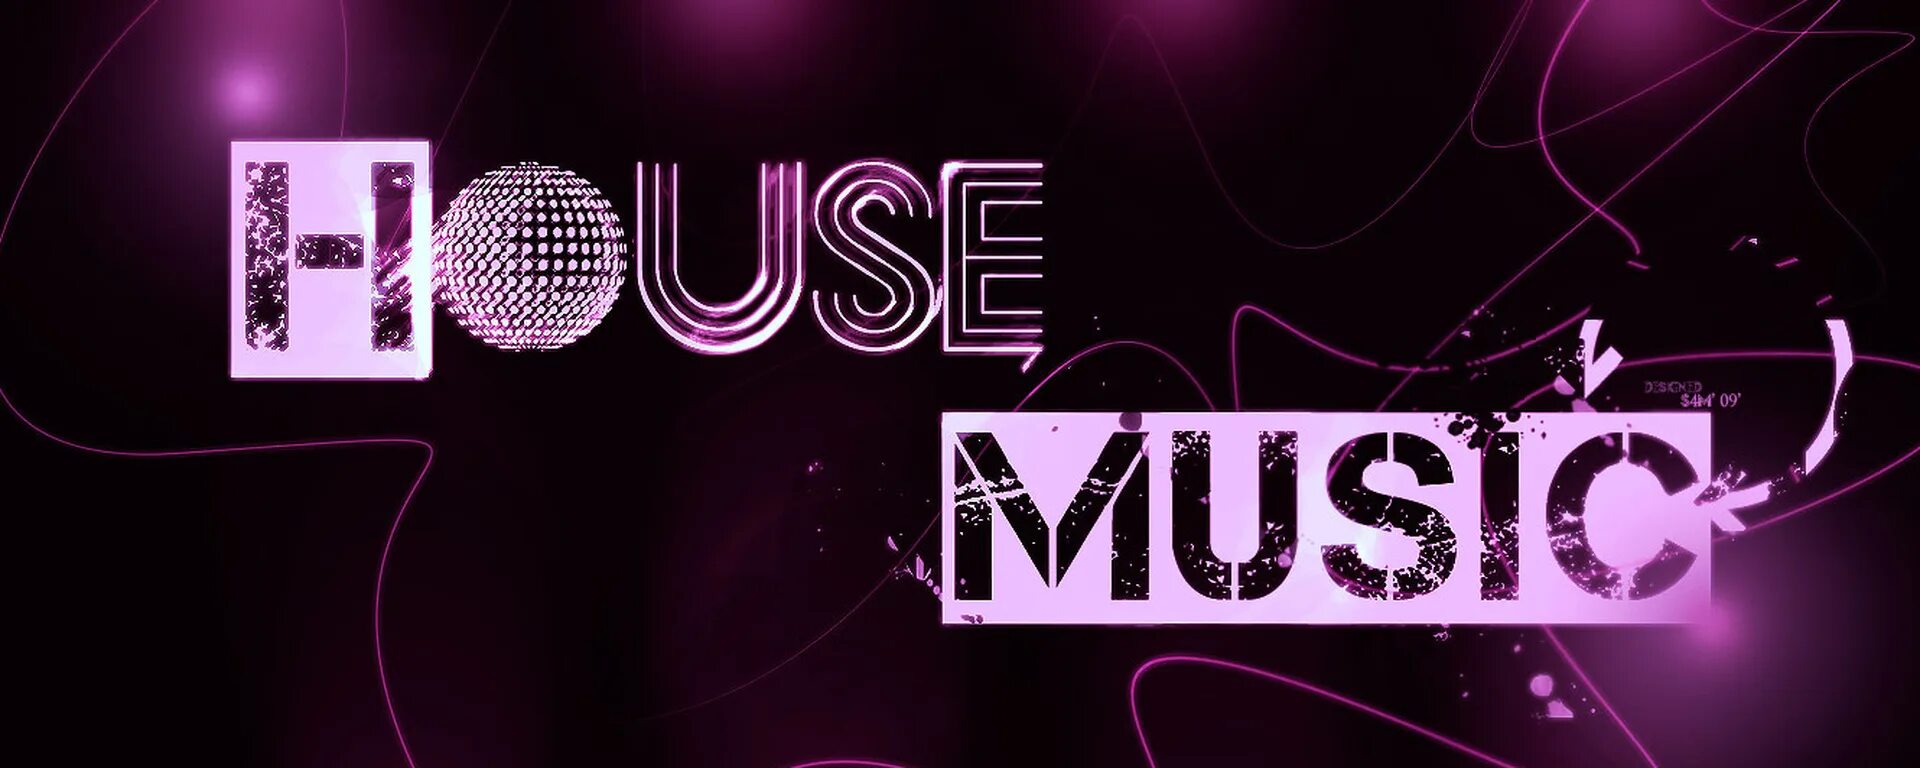 Слушать house music. Хаус Мьюзик. House Music картинки. Хаус стиль музыки. House Music обложка.